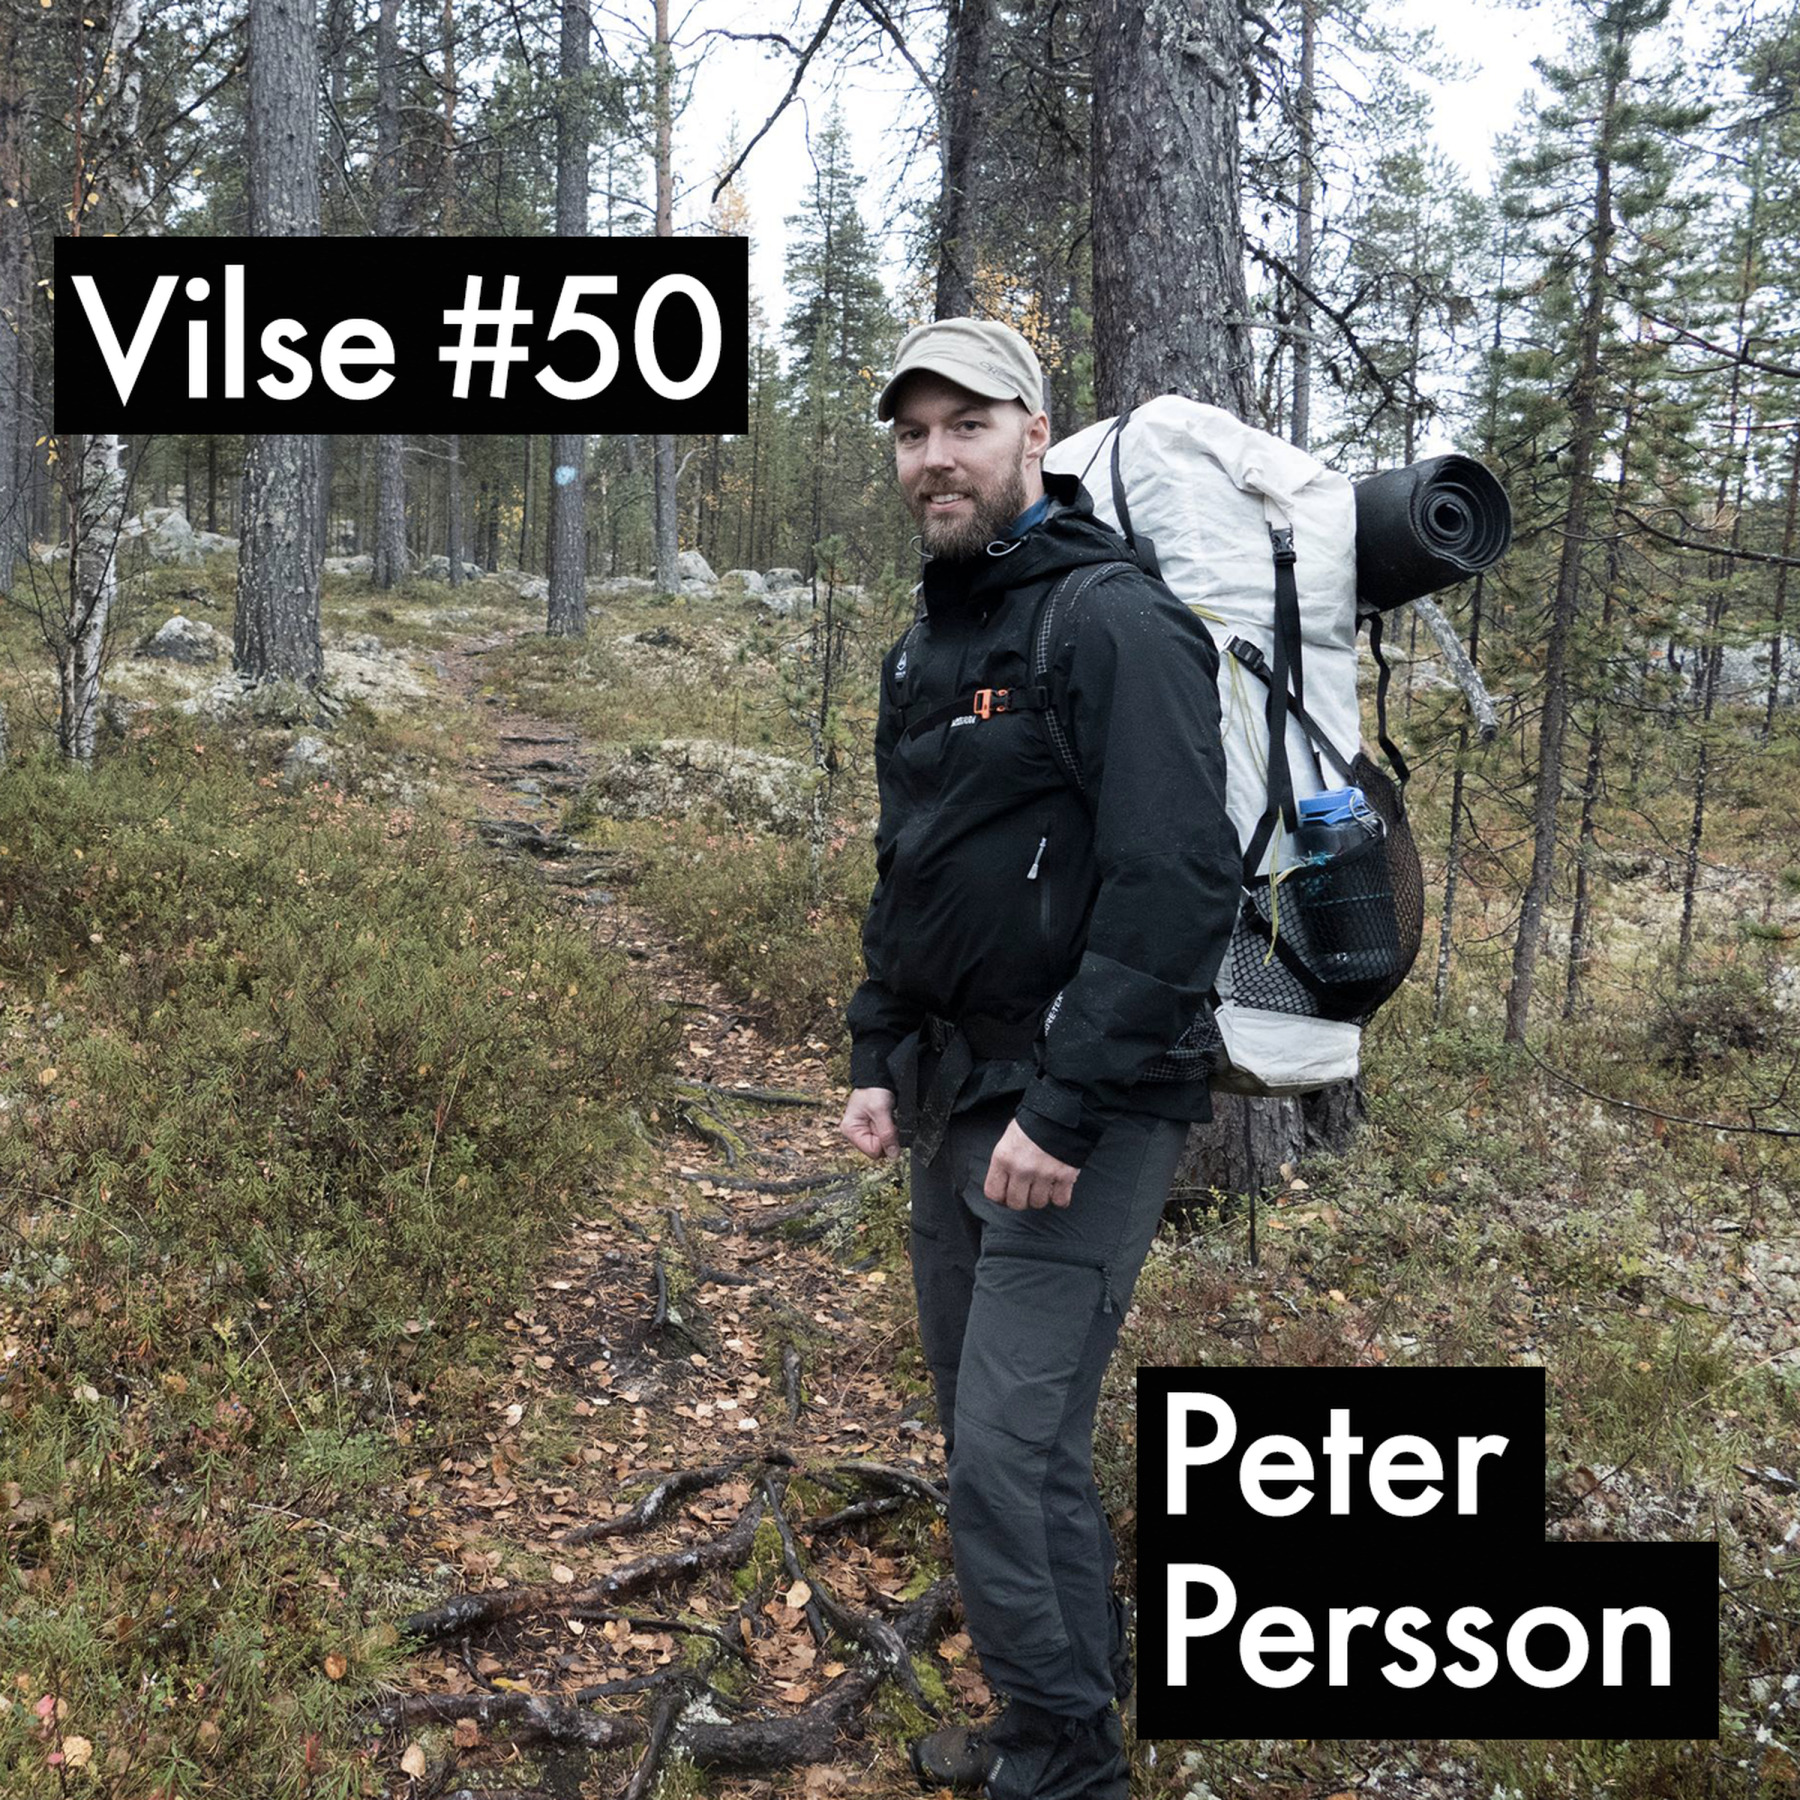 Vilse_Peter_Persson